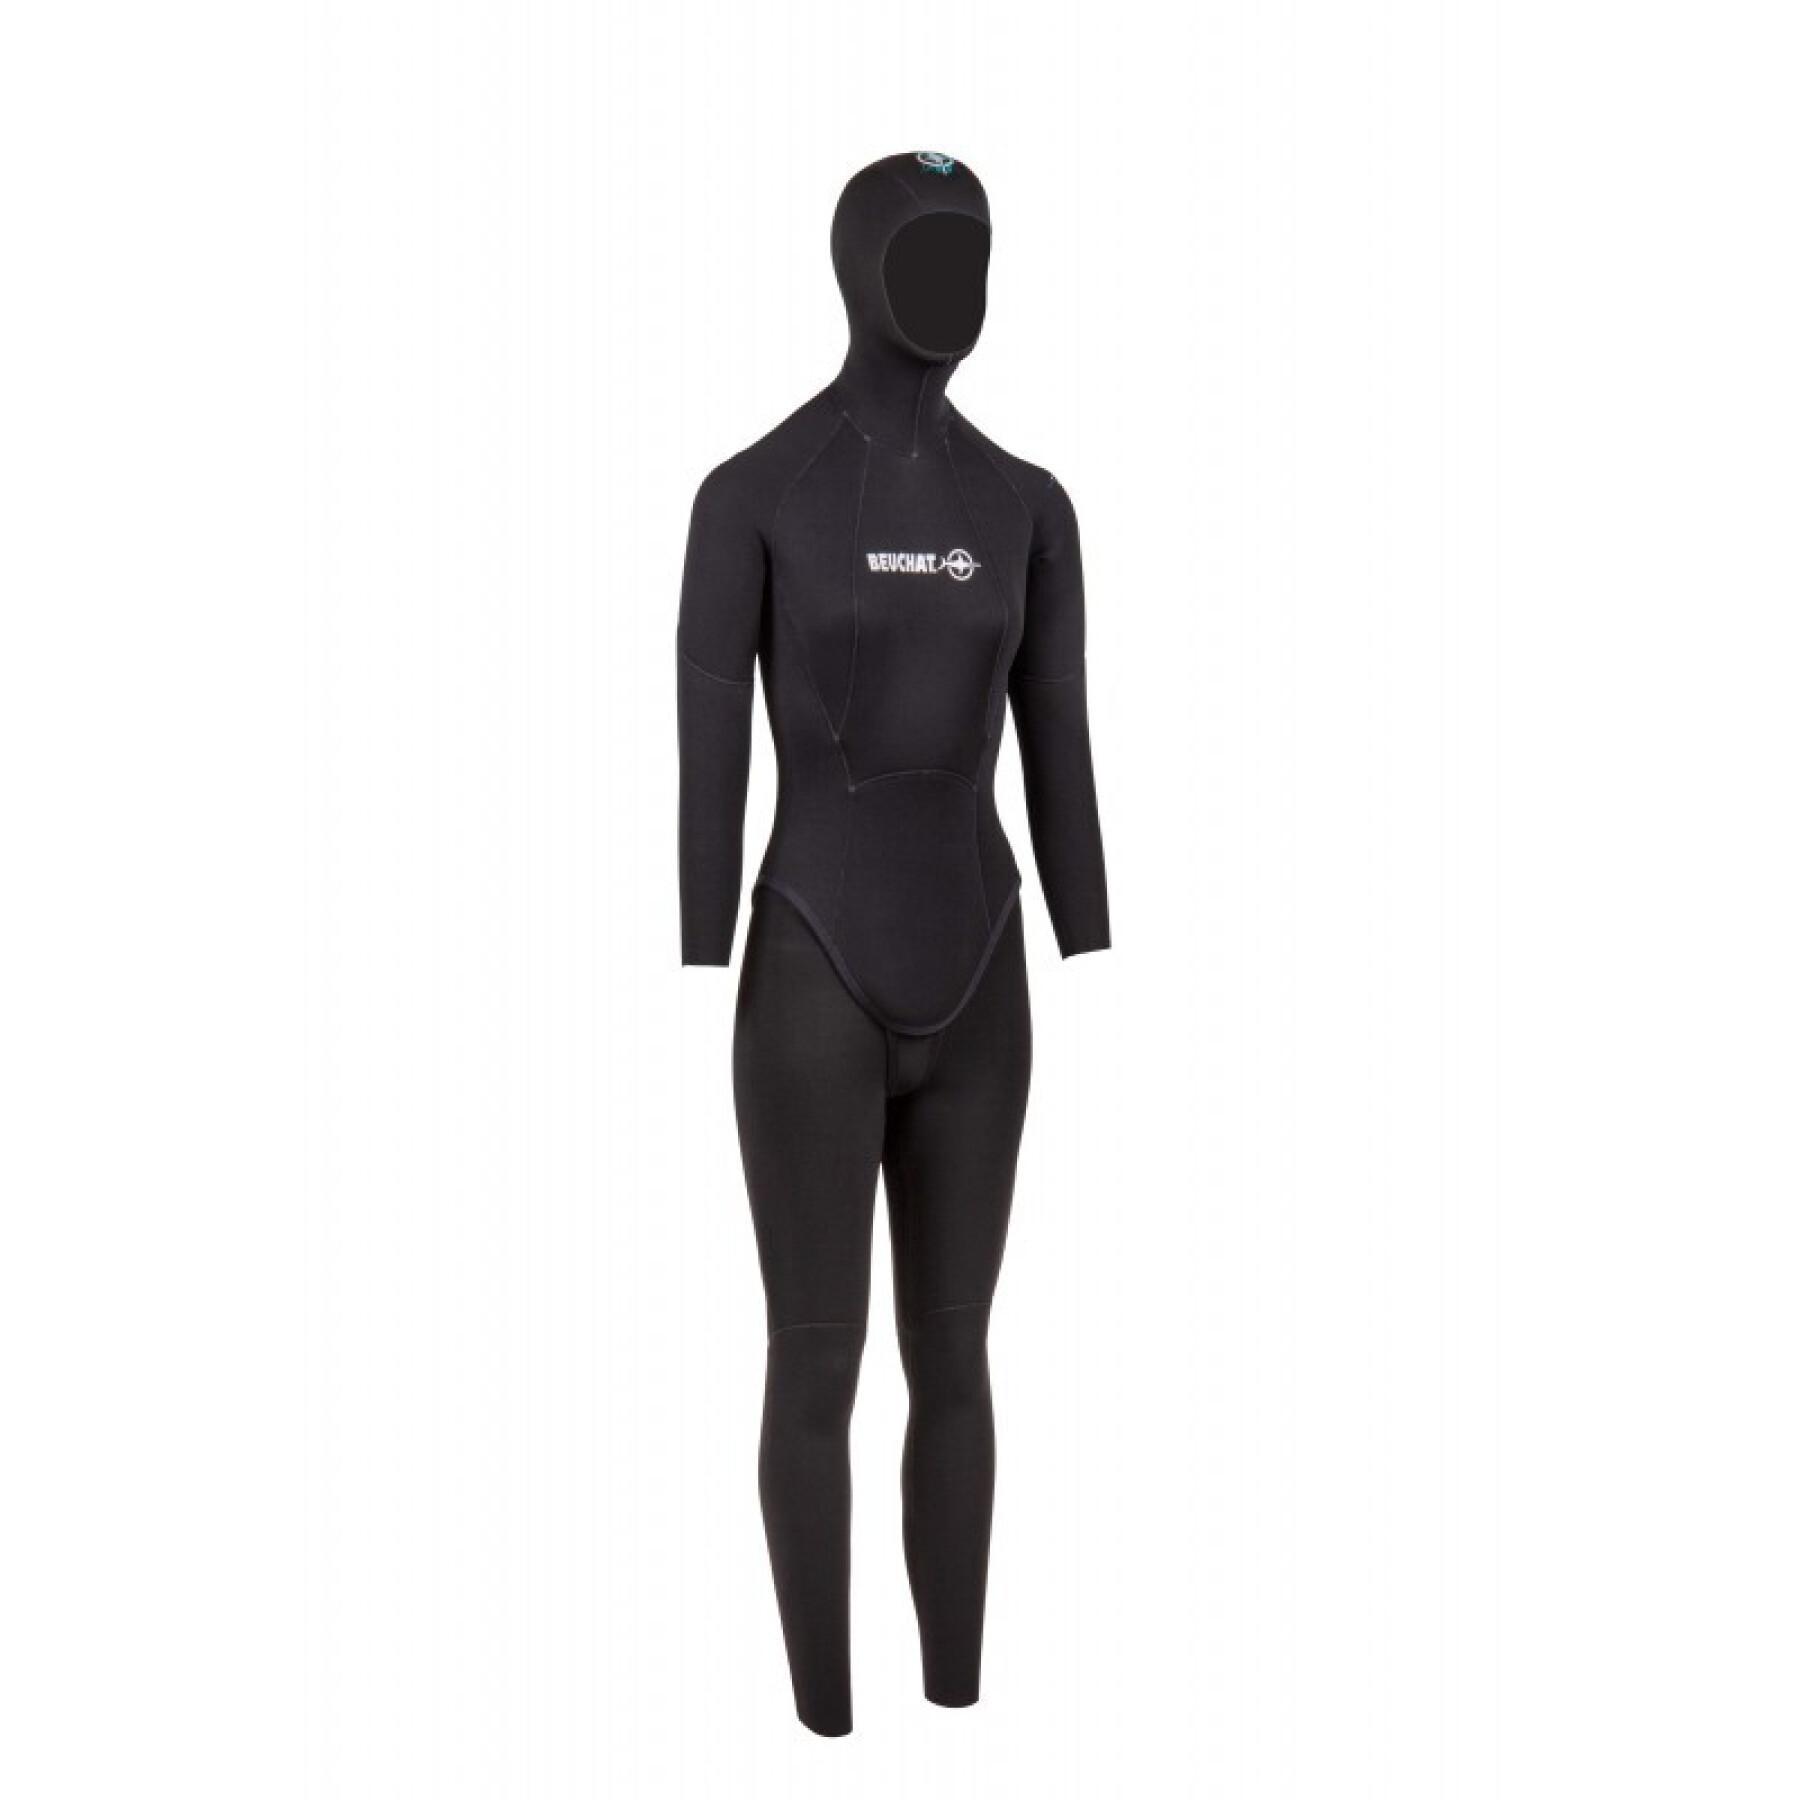 2-piece wetsuit for women Beuchat Inspiro 5 mm